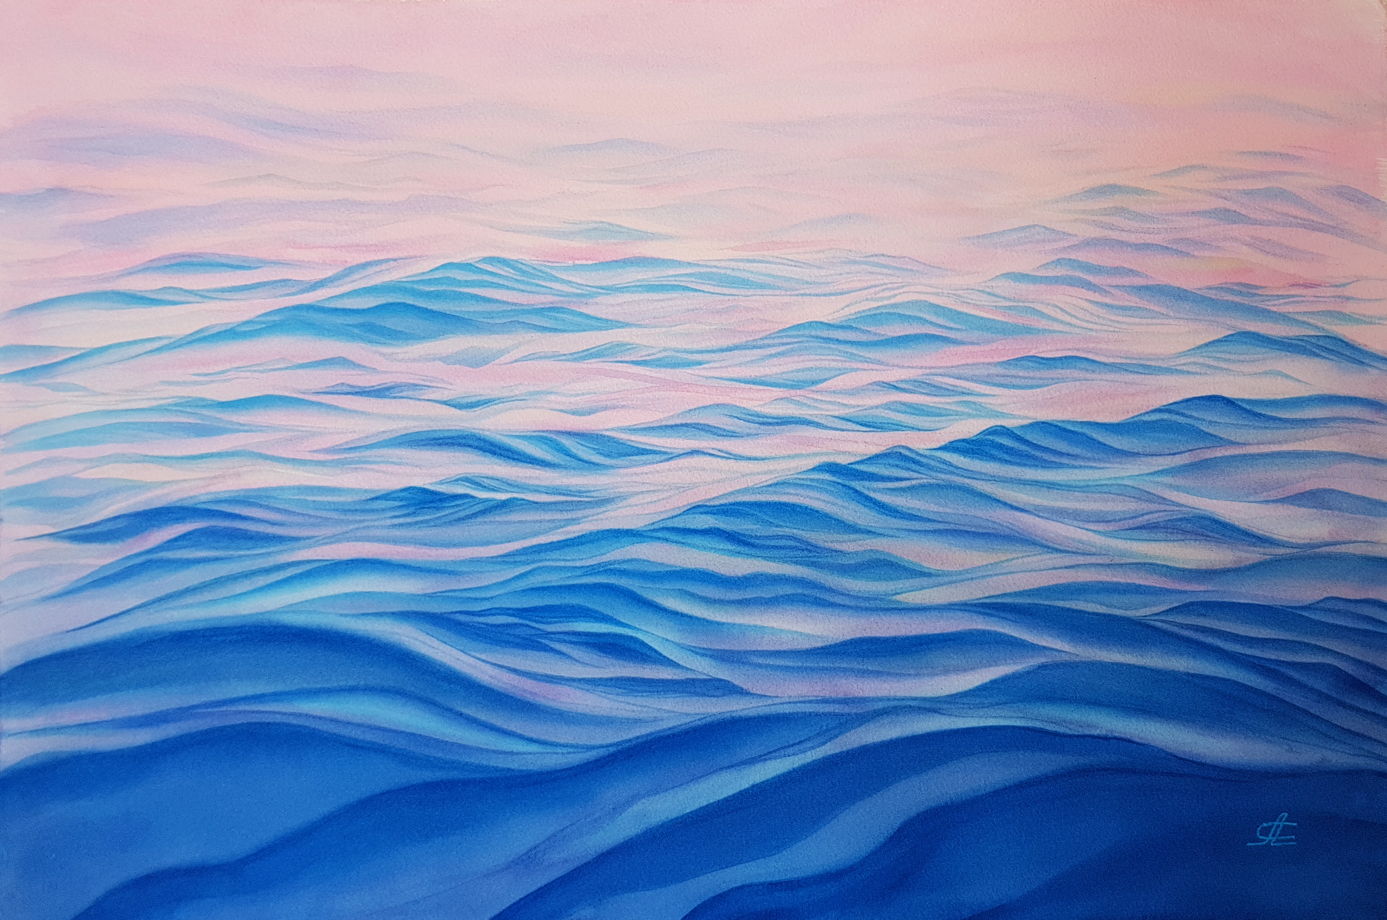 Акварельная картина "Романтика океана" (56 х 38 см)